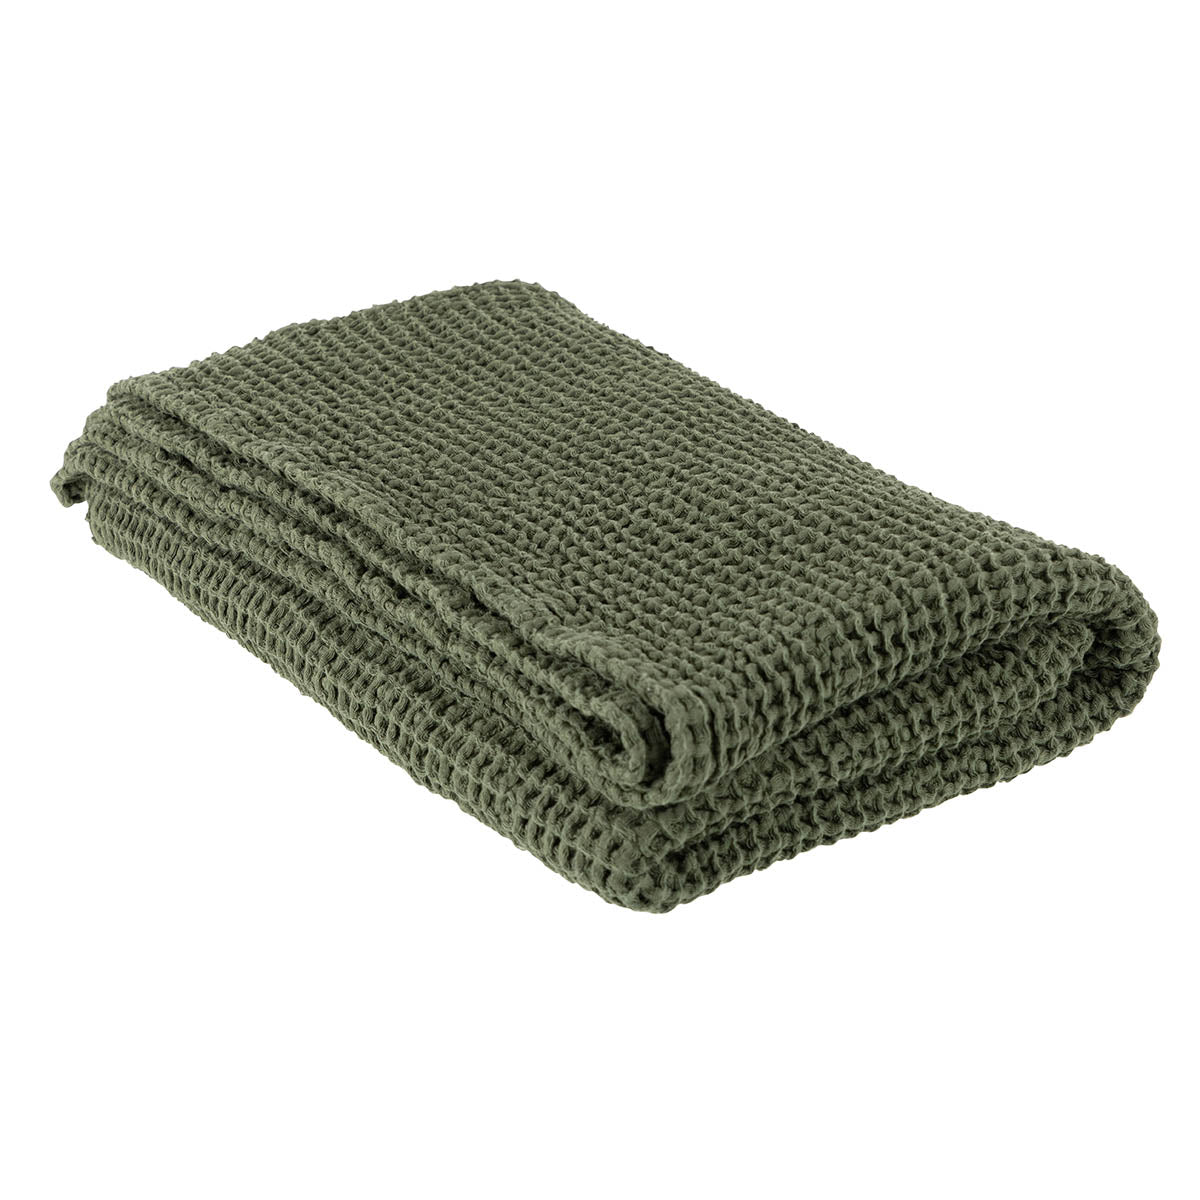 Nuppu bath towel, green